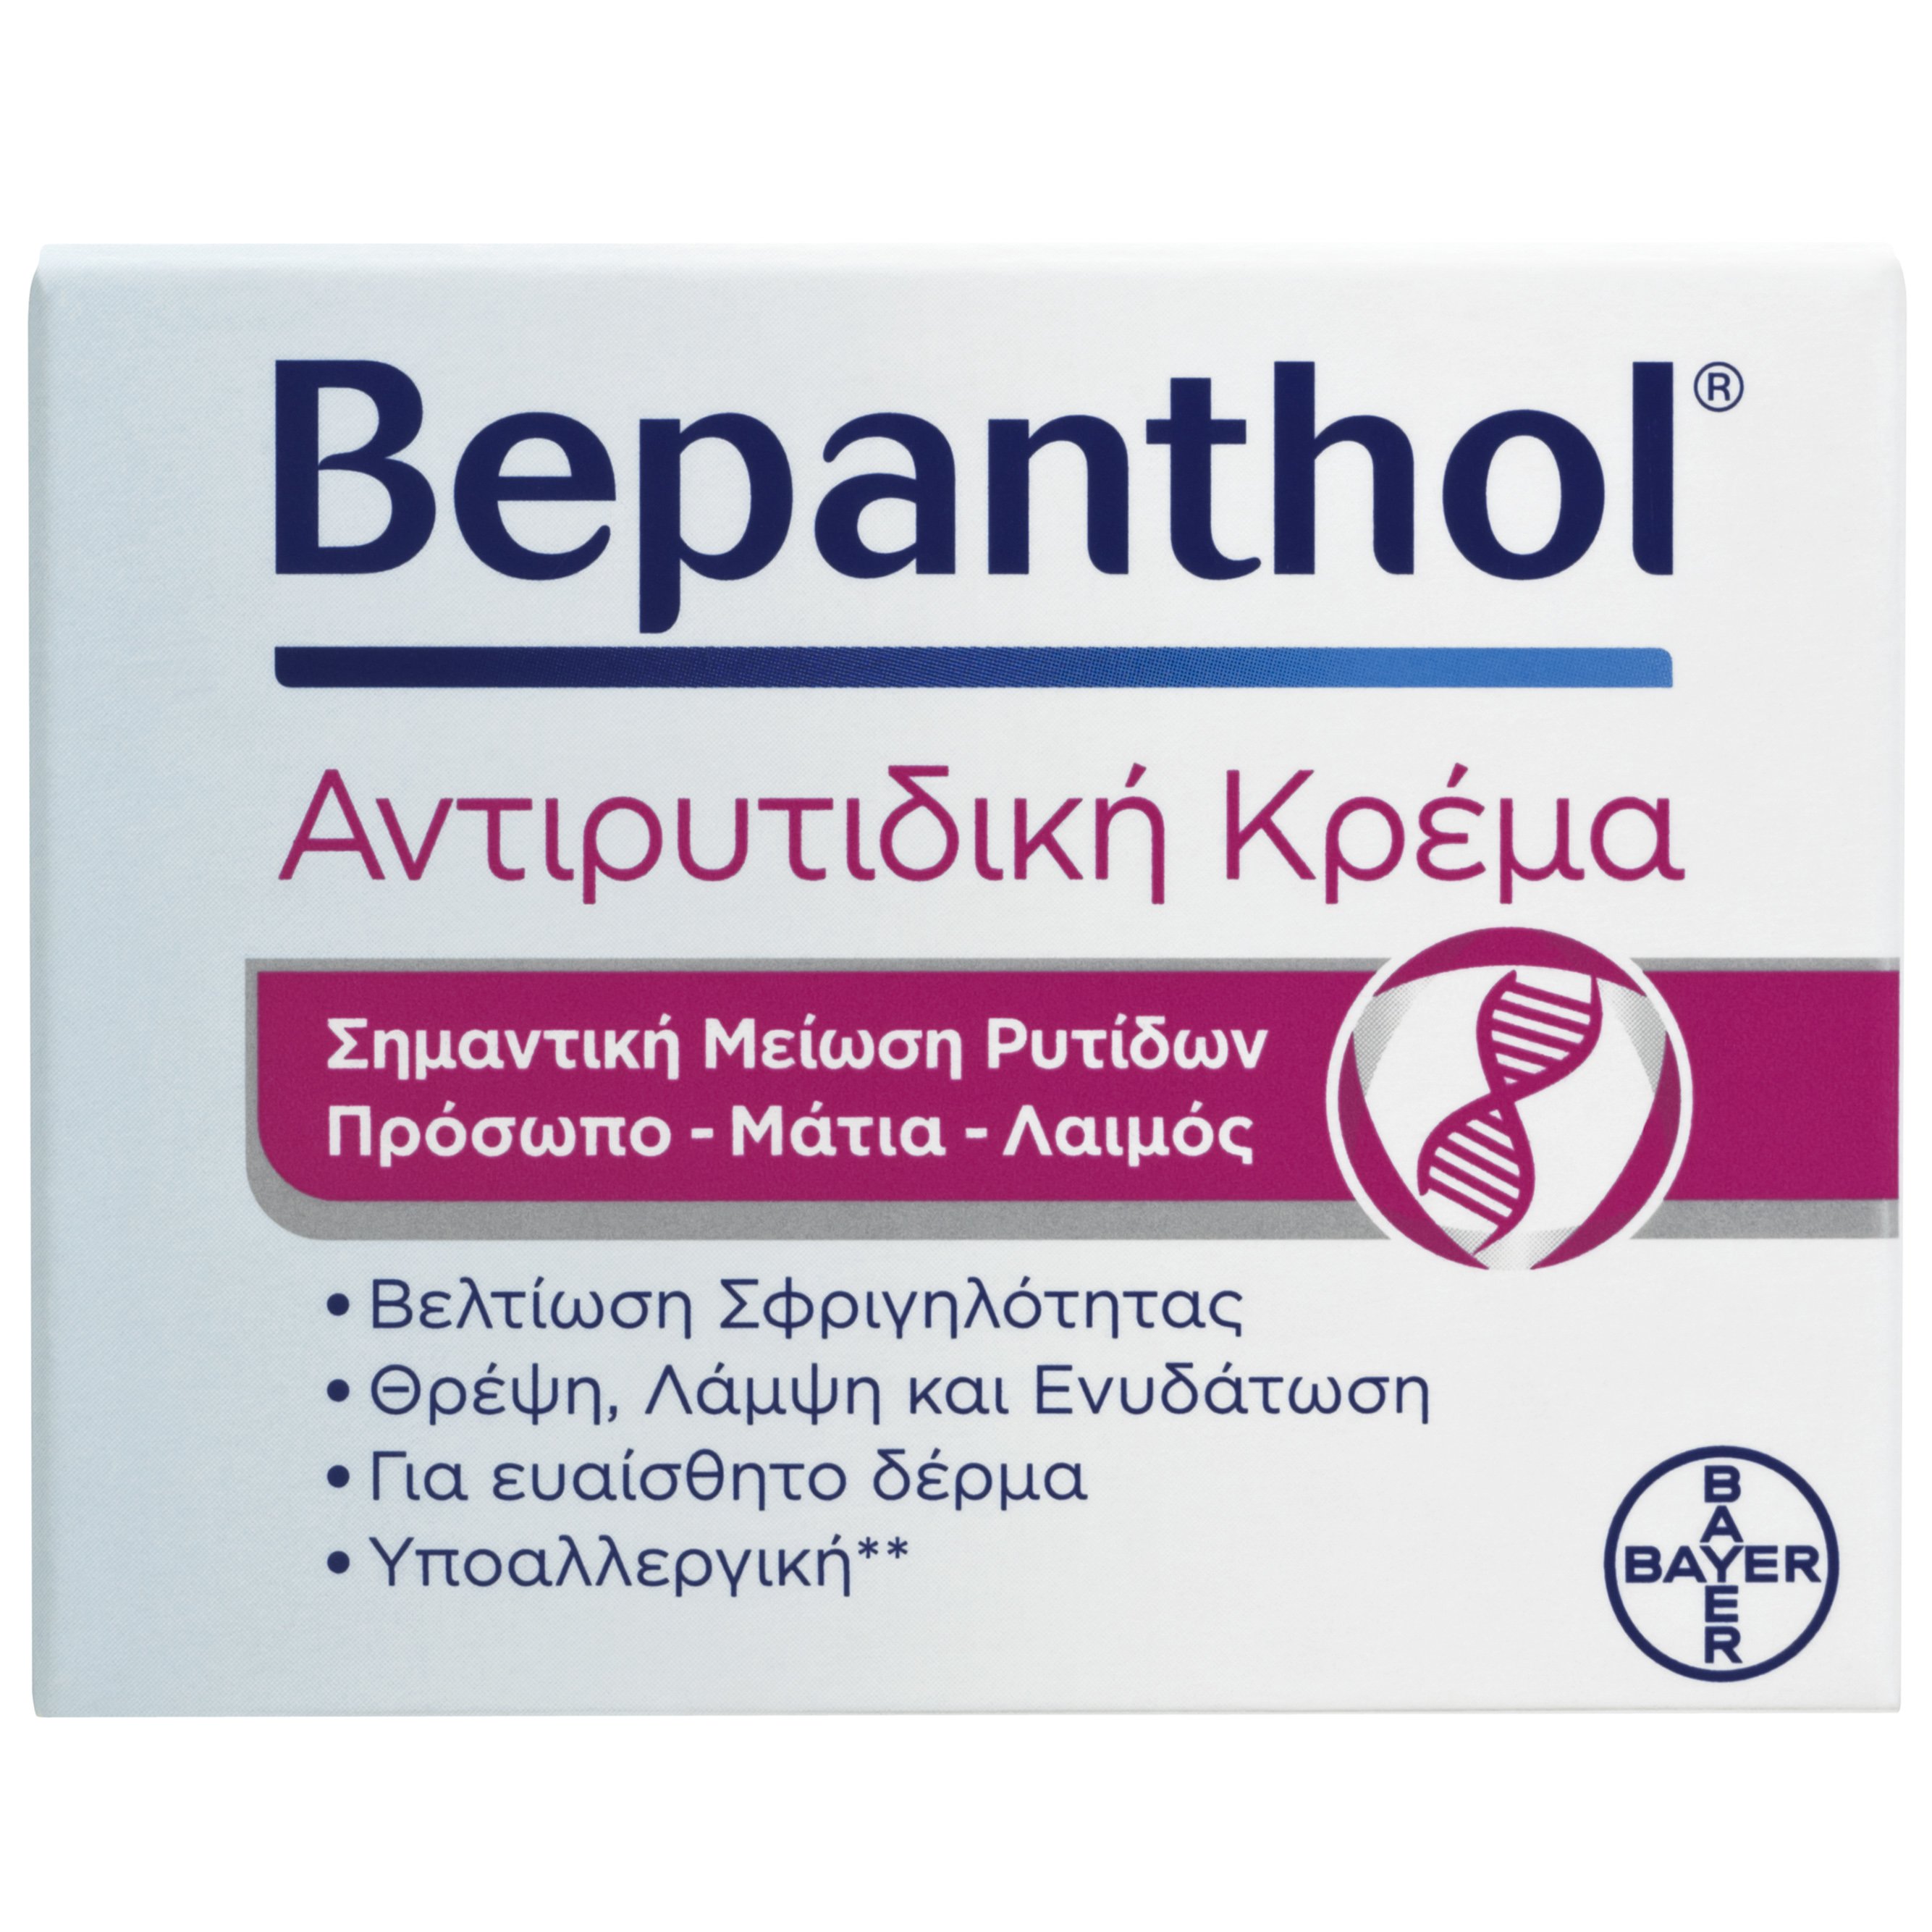 Bepanthol Αντιρυτιδική Κρέμα για Πρόσωπο, Μάτια & Λαιμό, Μειώνει Σημαντικά τις Ρυτίδες 50ml